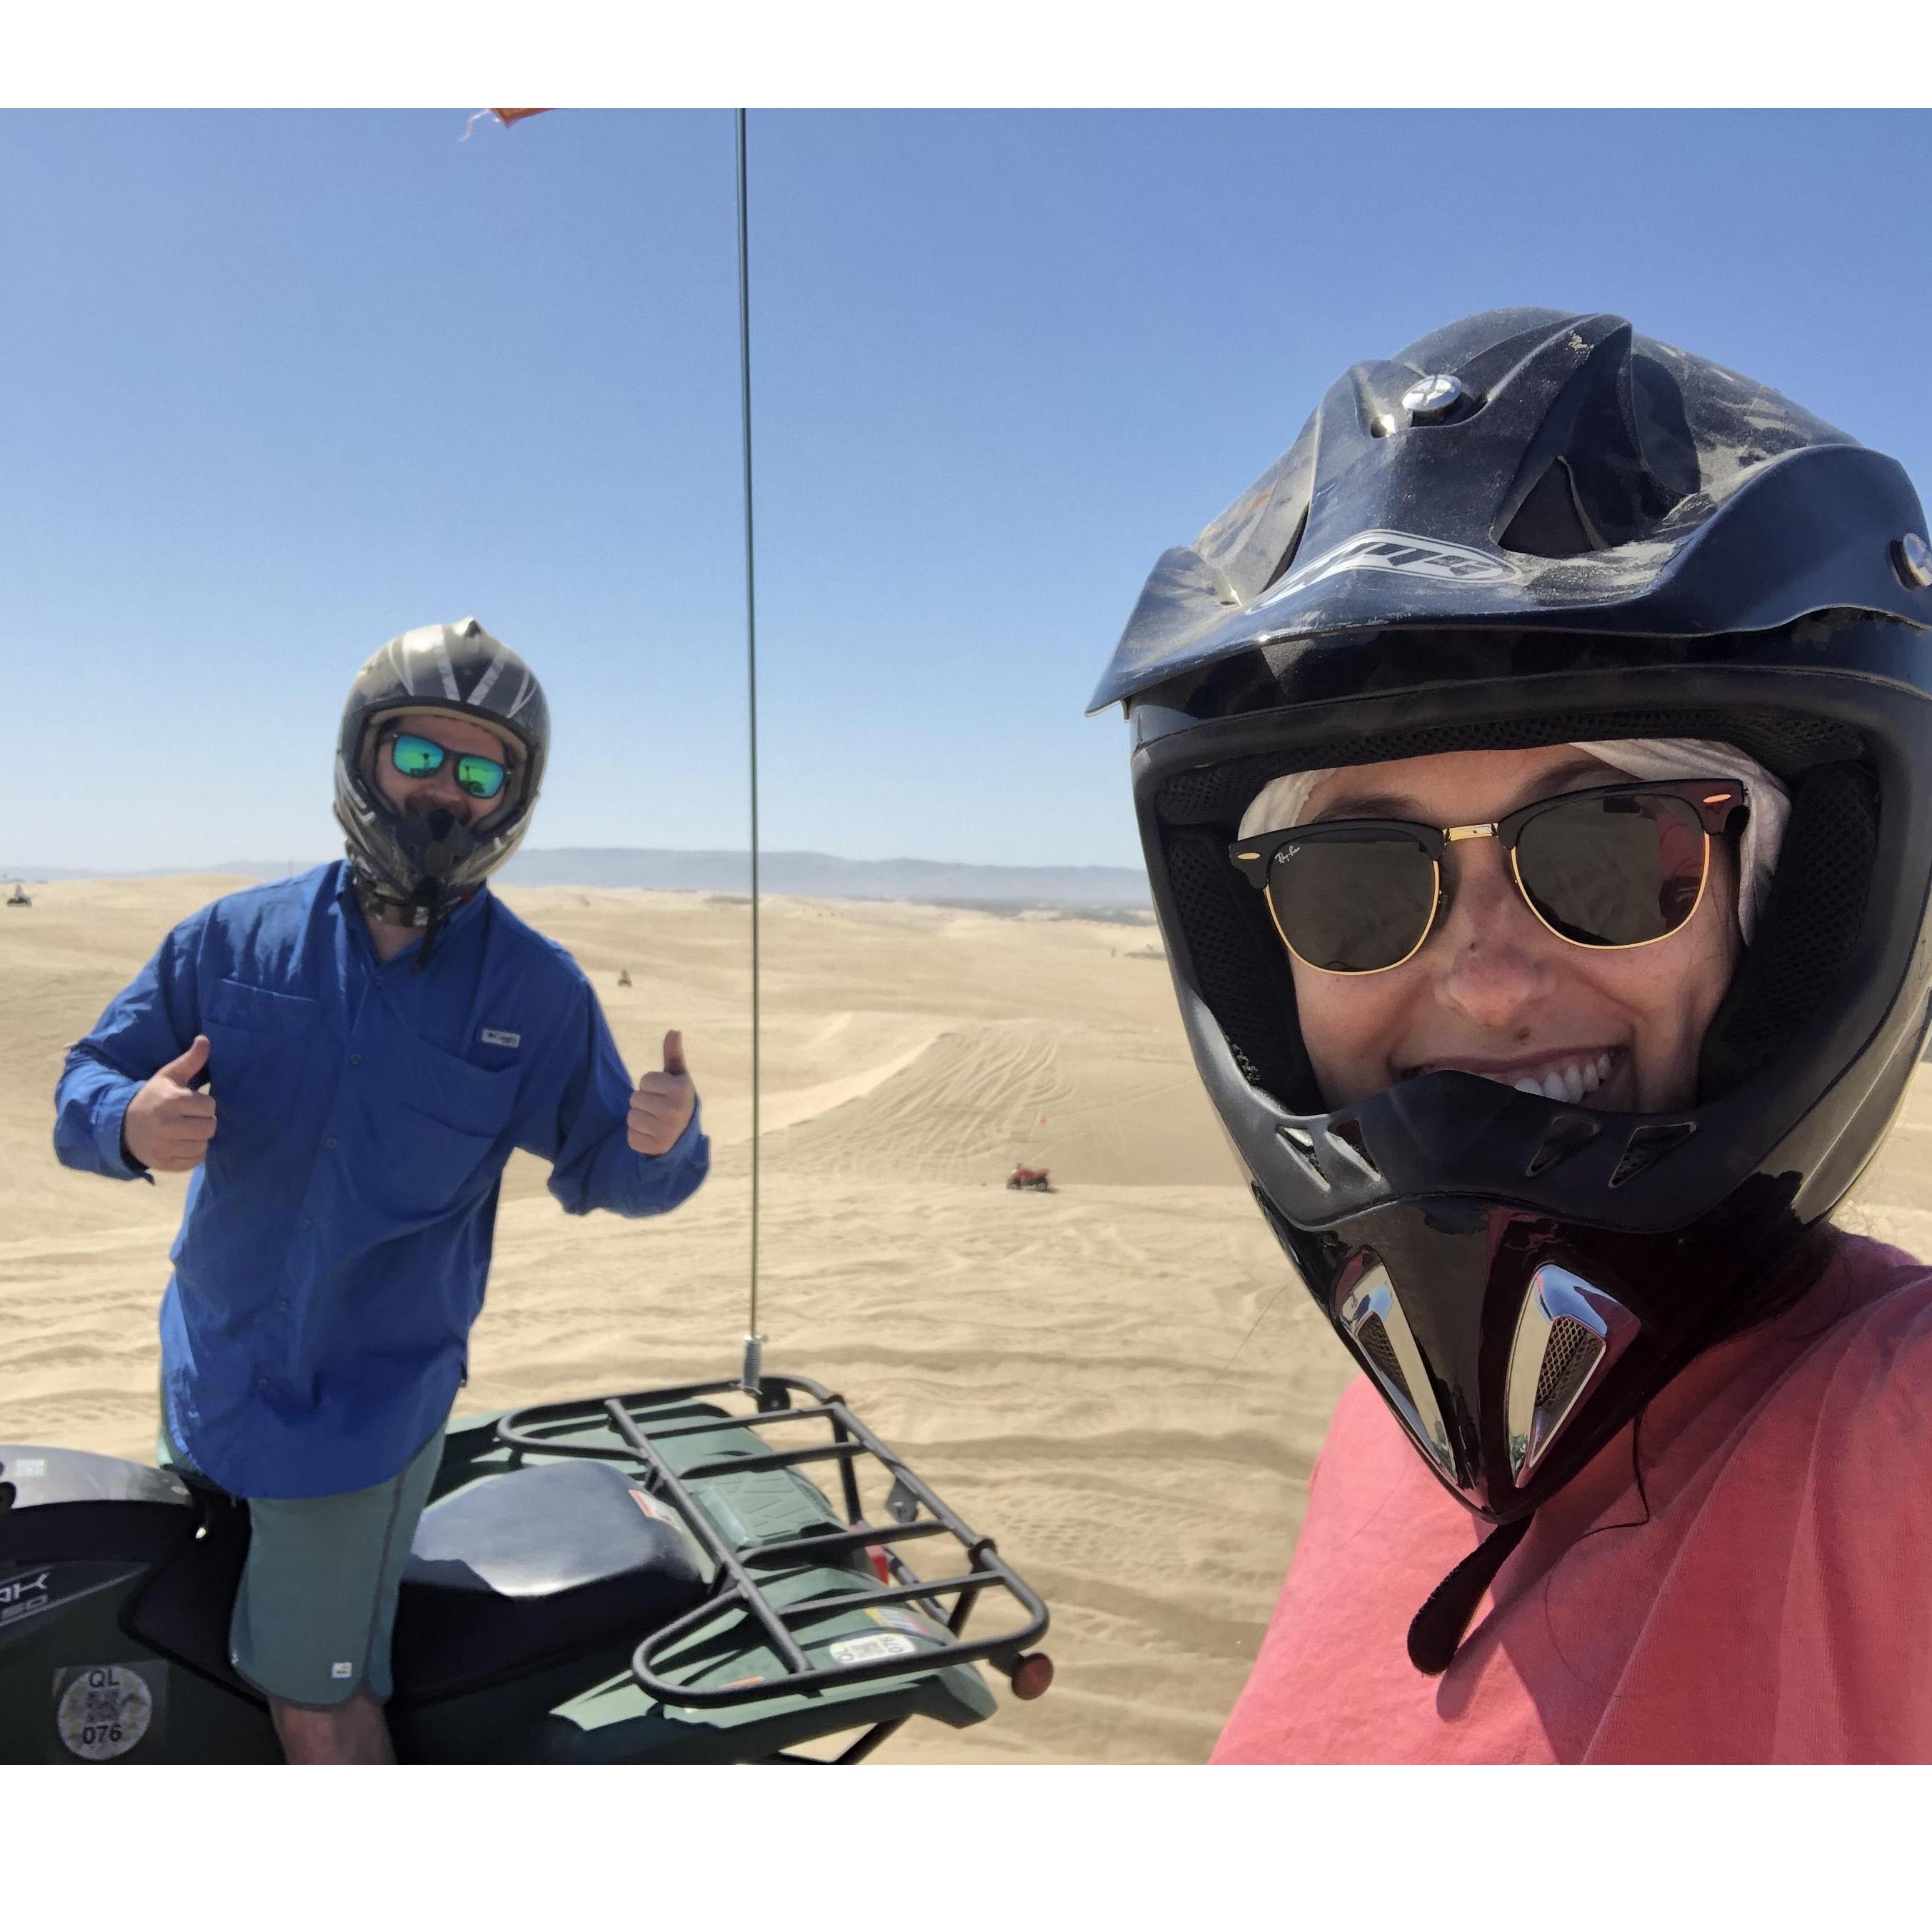 ATV'ing in Pismo Beach - 2019